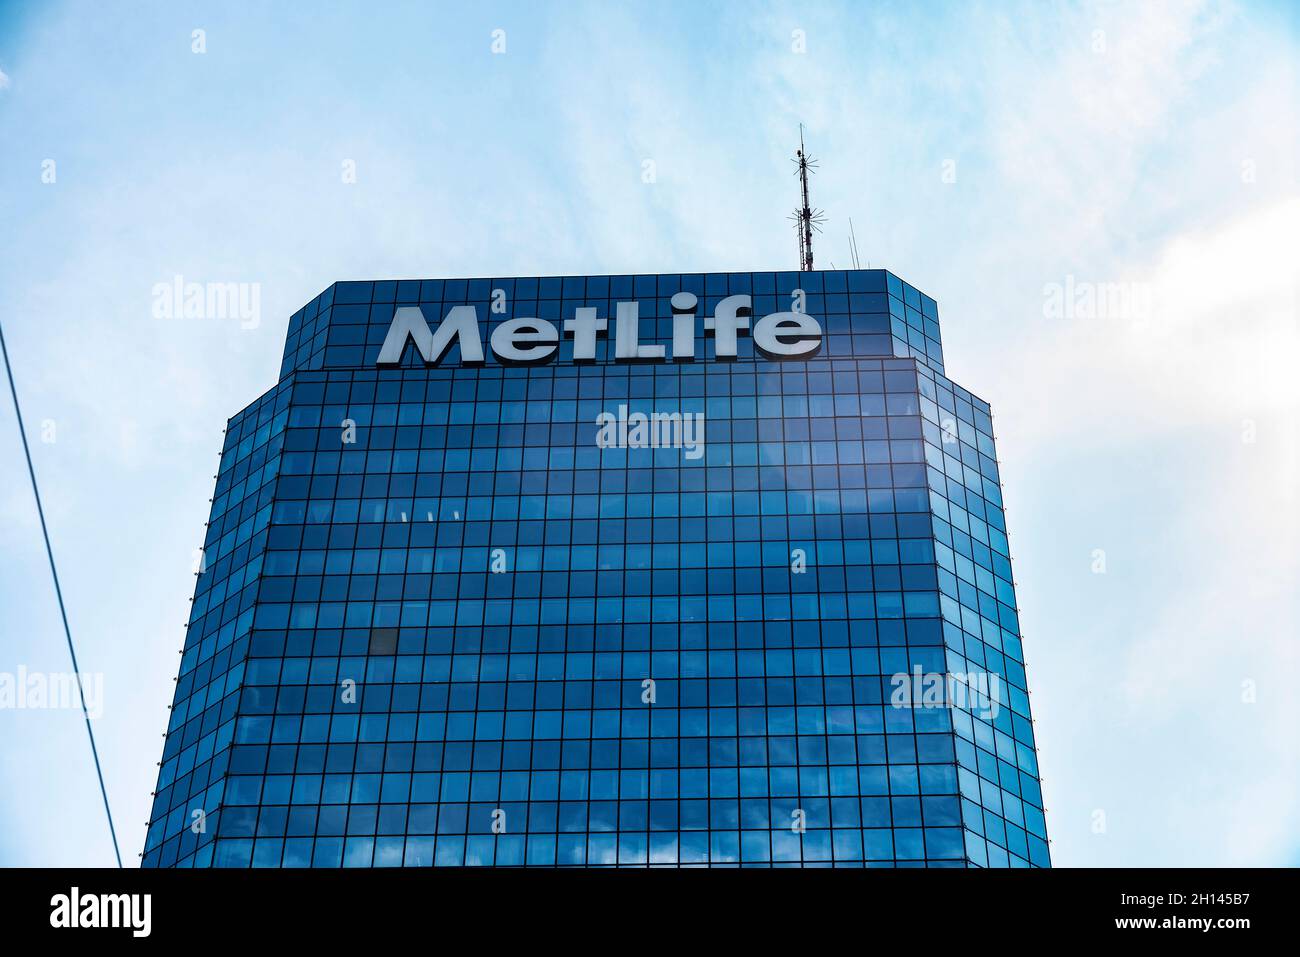 Varsovie, Pologne - 1er septembre 2018 : MetLife American Insurance Company, gratte-ciel bleu moderne dans le centre de Varsovie, Pologne Banque D'Images